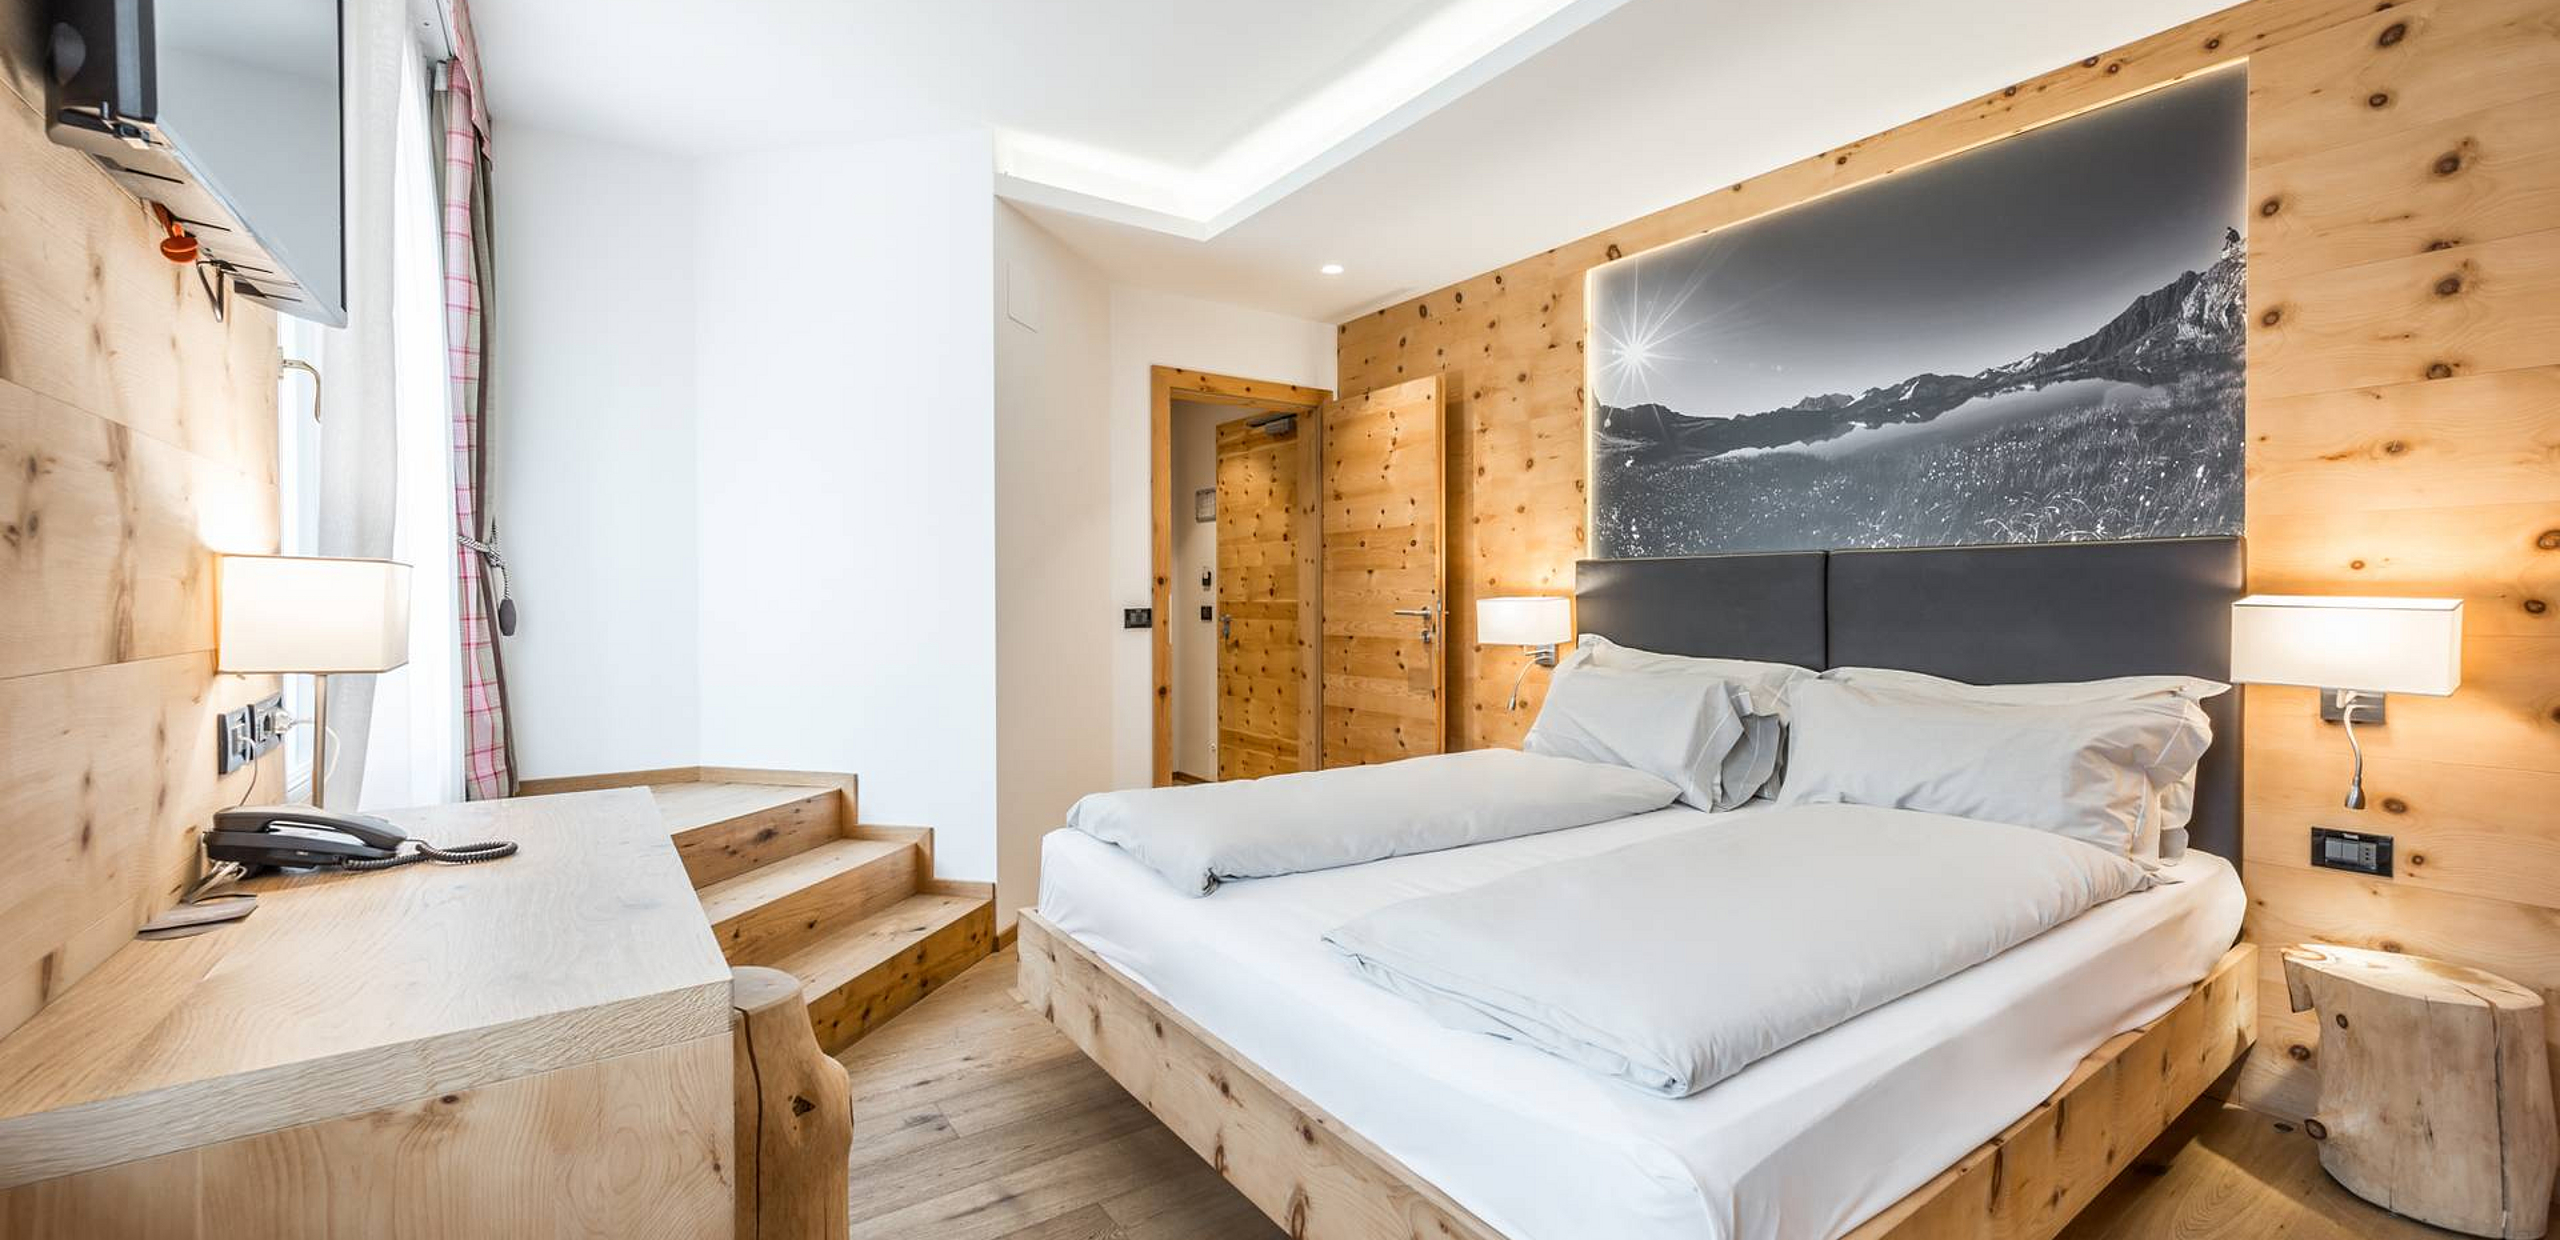 Zimmer mit eigenem Whirlpool im Trentino, Val di Sole